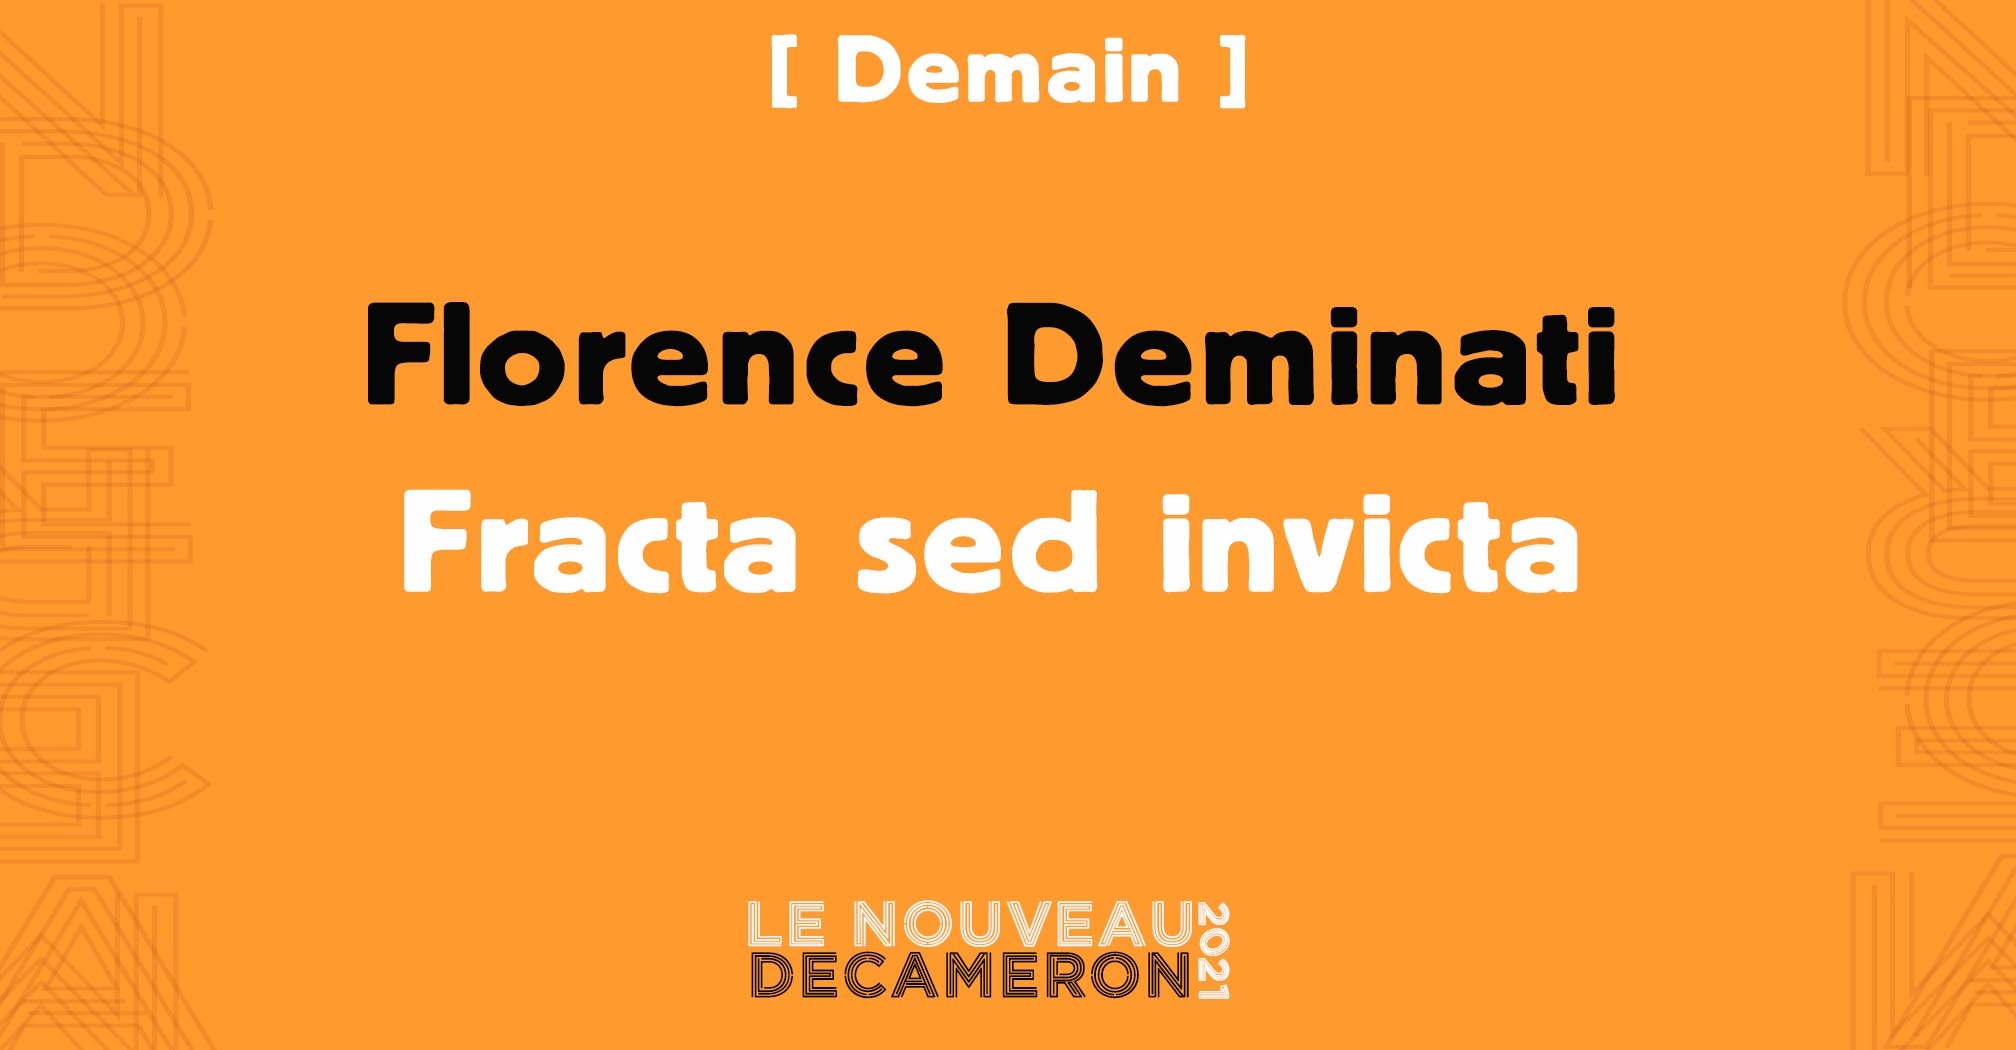 Florence Deminati - Fracta sed invicta